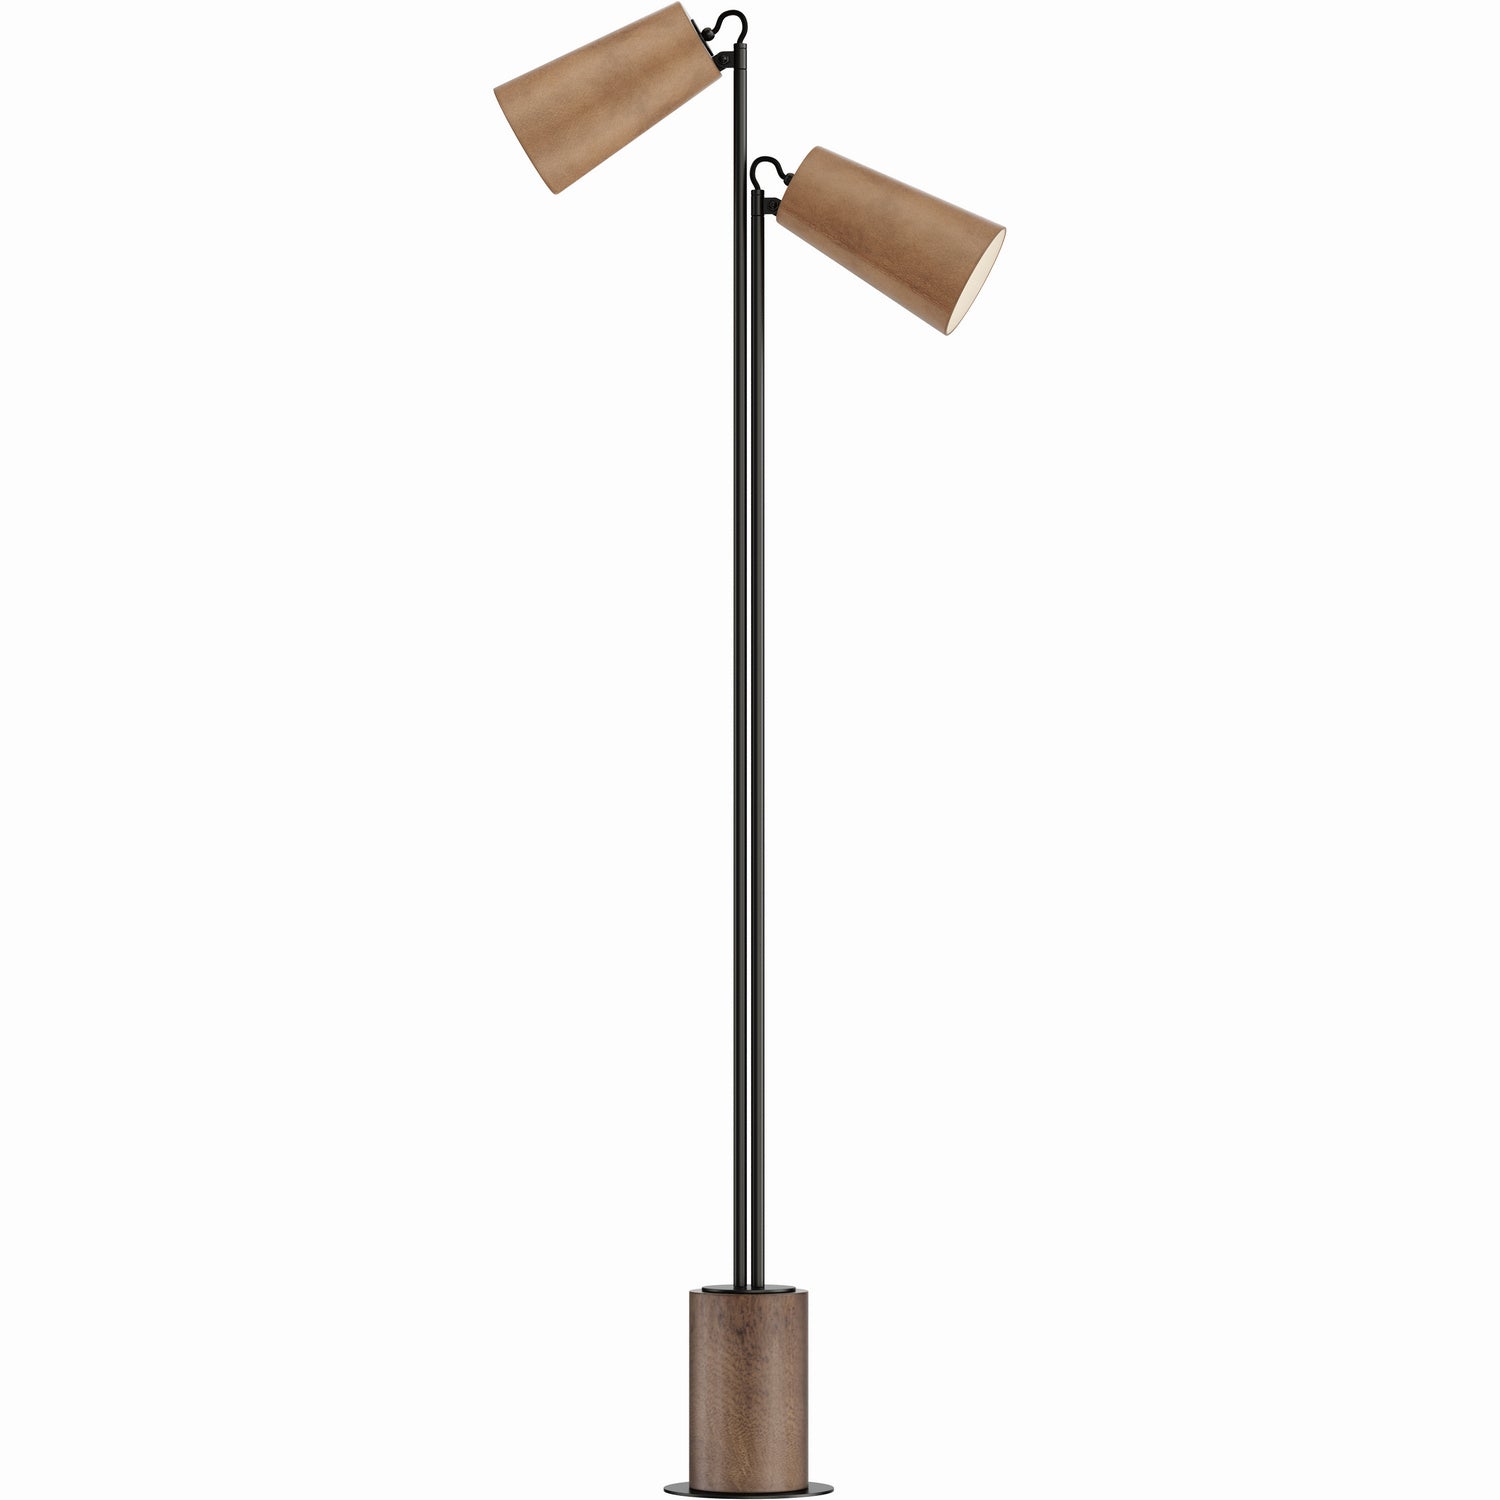 Maxim - LED Floor Lamp - Scout - Weathered Wood / Tan Leather- Union Lighting Luminaires Decor